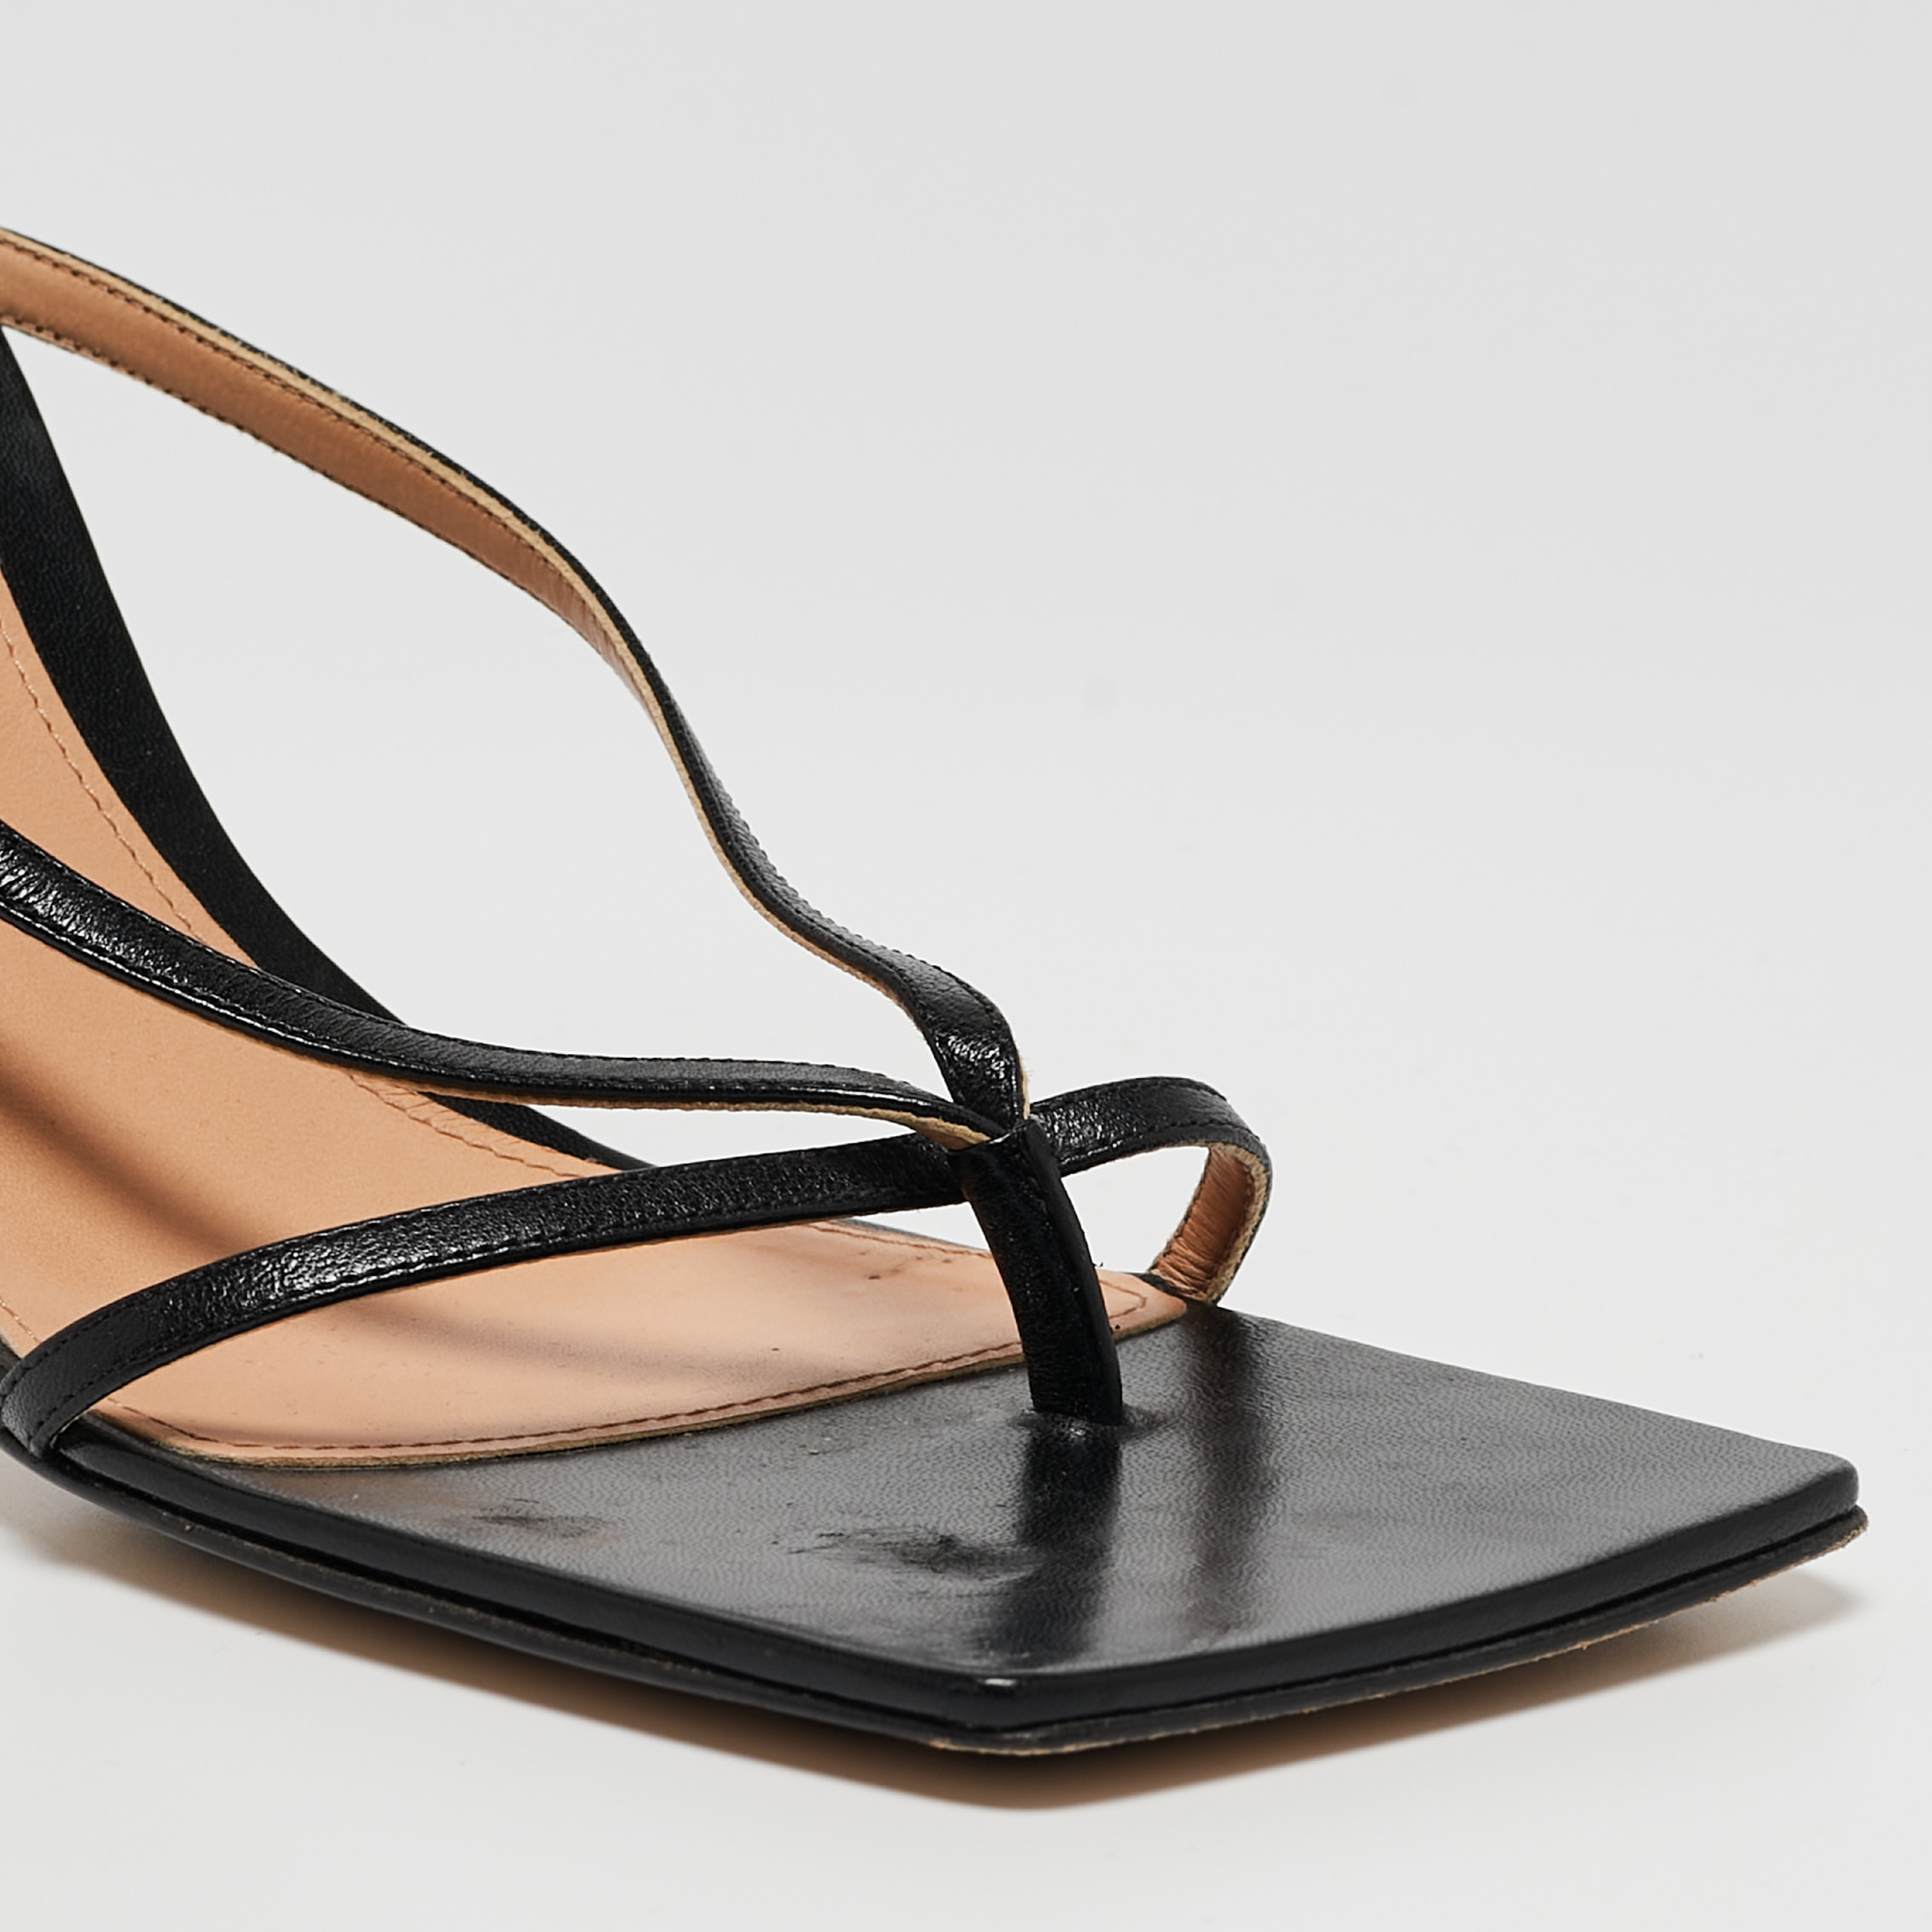 Bottega Veneta Black Leather Stretch Ankle Strap Sandals Size 40.5